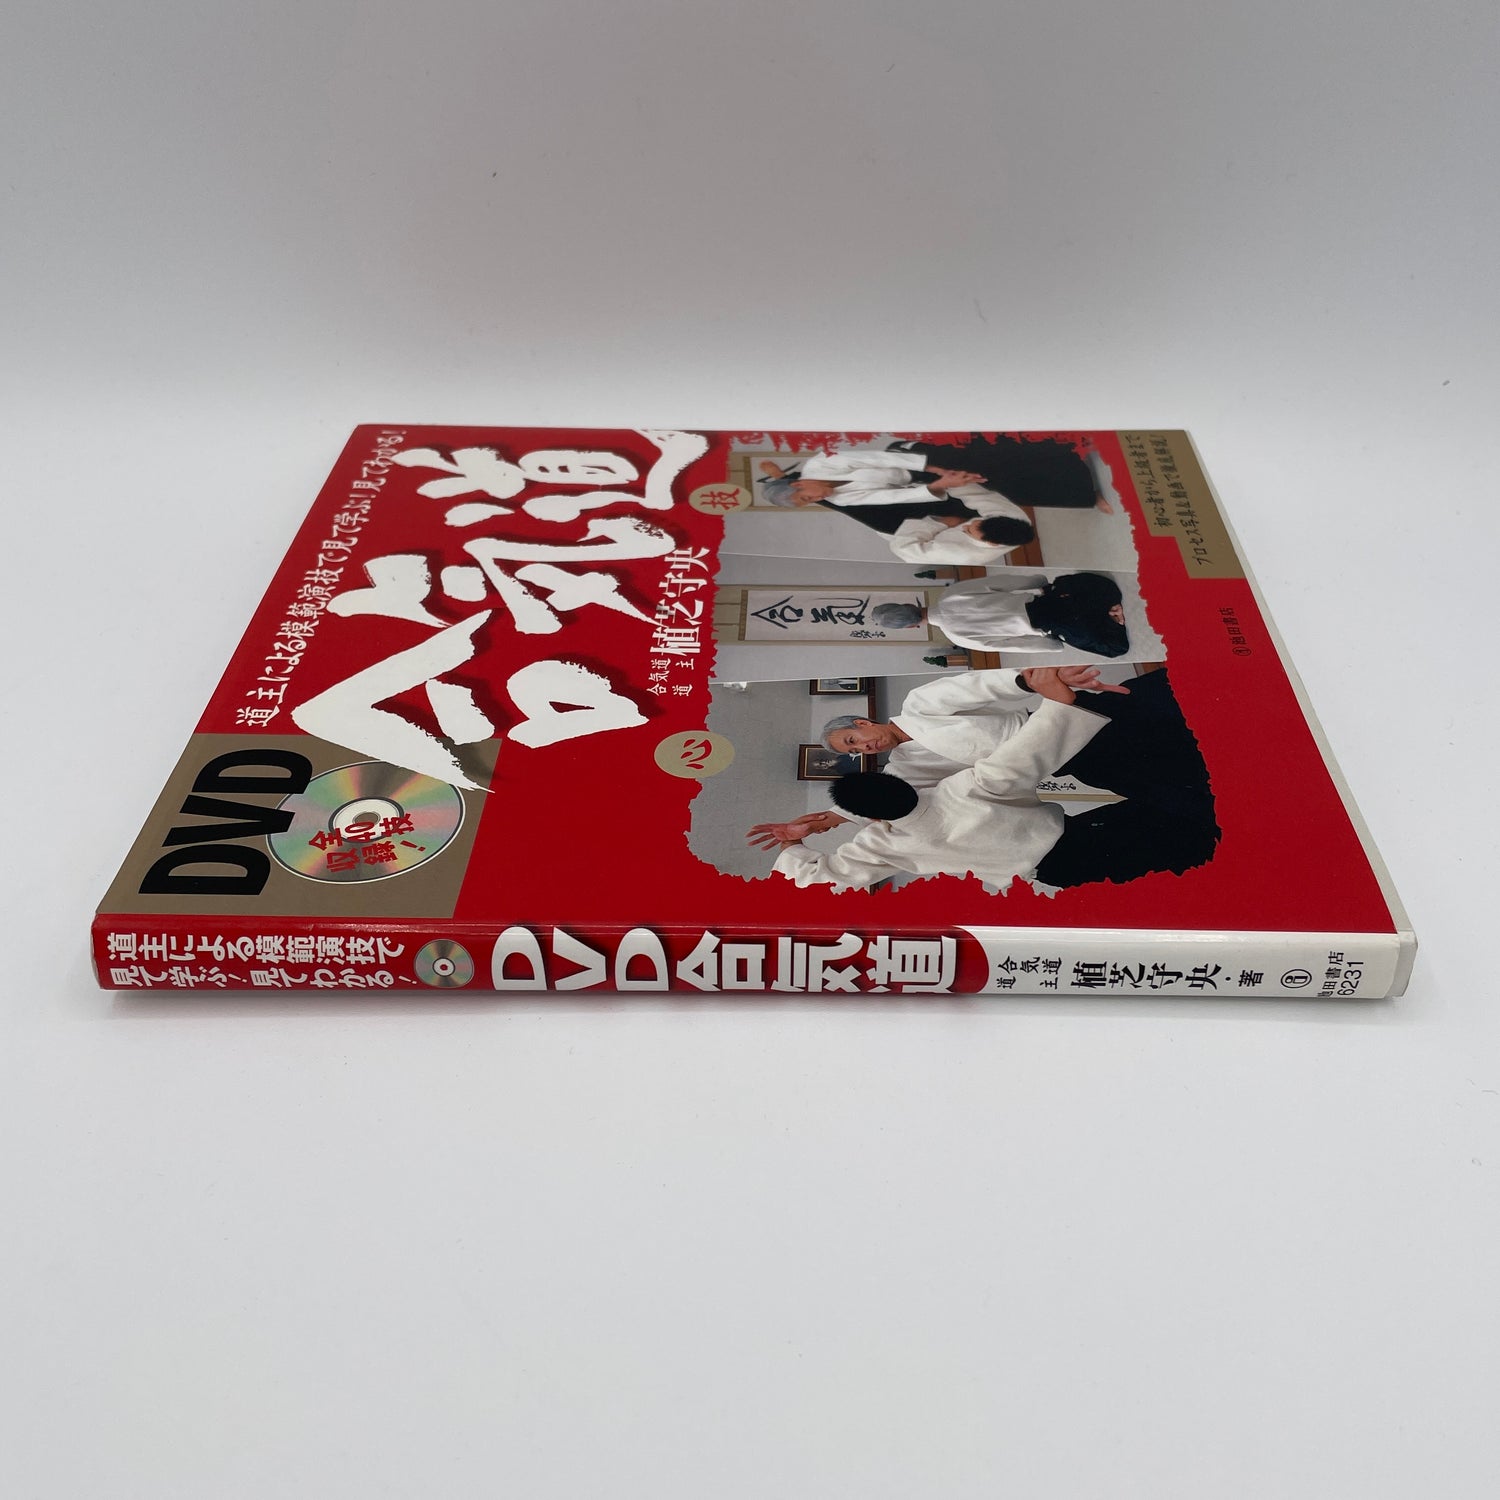 Learn Aikido by Watching Book & DVD by Moriteru Ueshiba (Preowned)